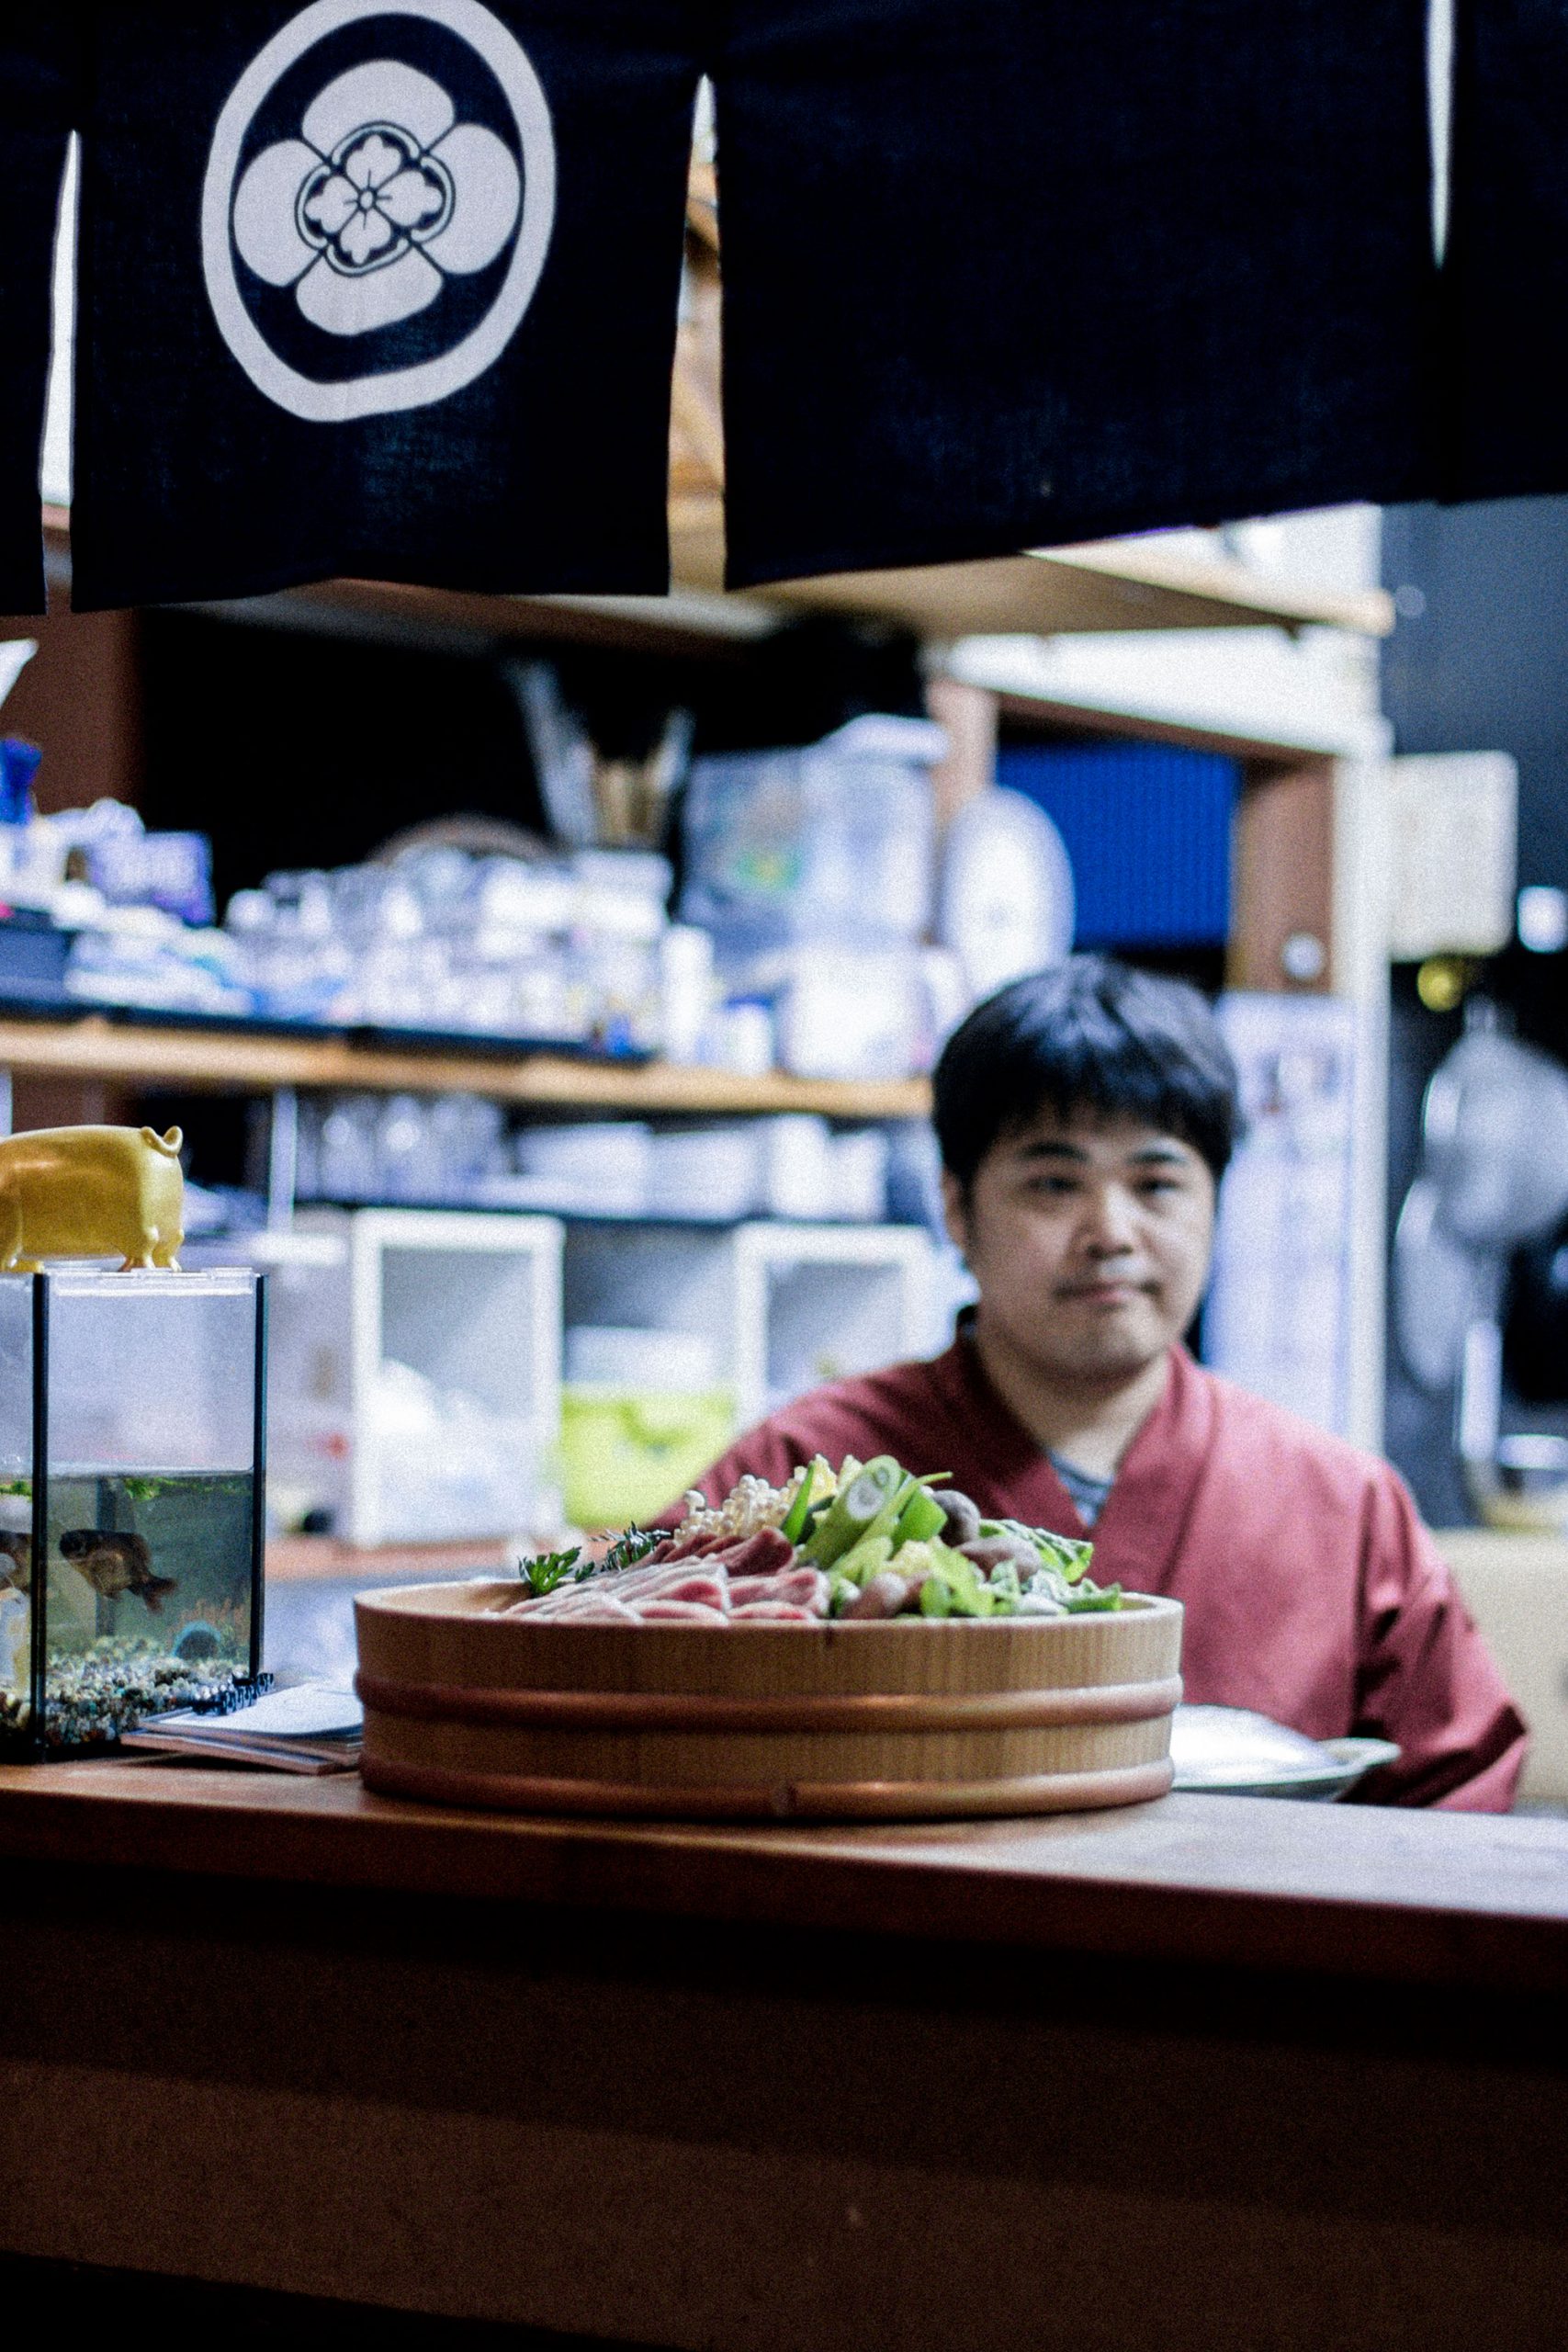 Duck Shabu Shabu at Oshokujidokoro Kimura お食事処きむら in Beppu, Japan / Food Guide to Beppu by iHeartAlice.com – Travel, Lifestyle Food & Fashionblog / What to eat in Beppu, Japan?